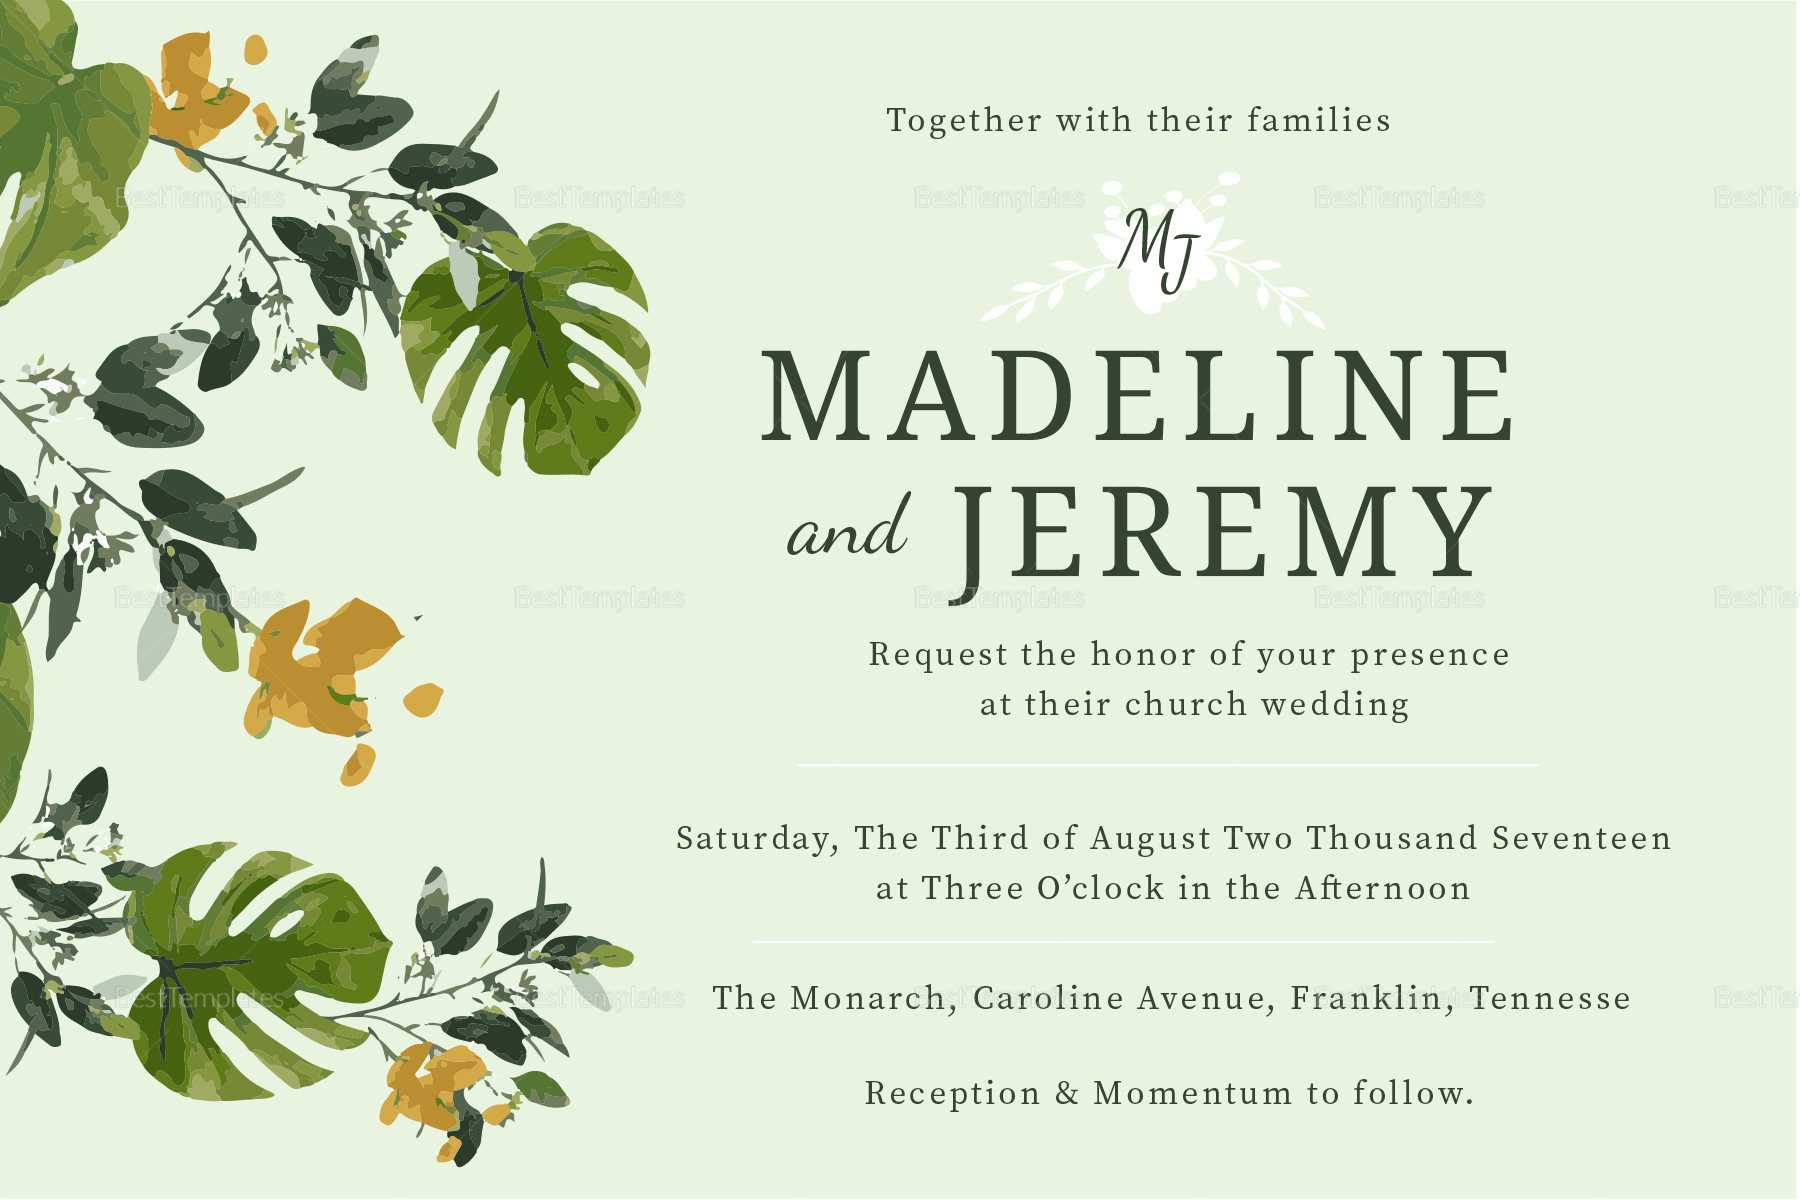 Church Wedding Invitation In Landscape And Portrait Within Church Wedding Invitation Card Template